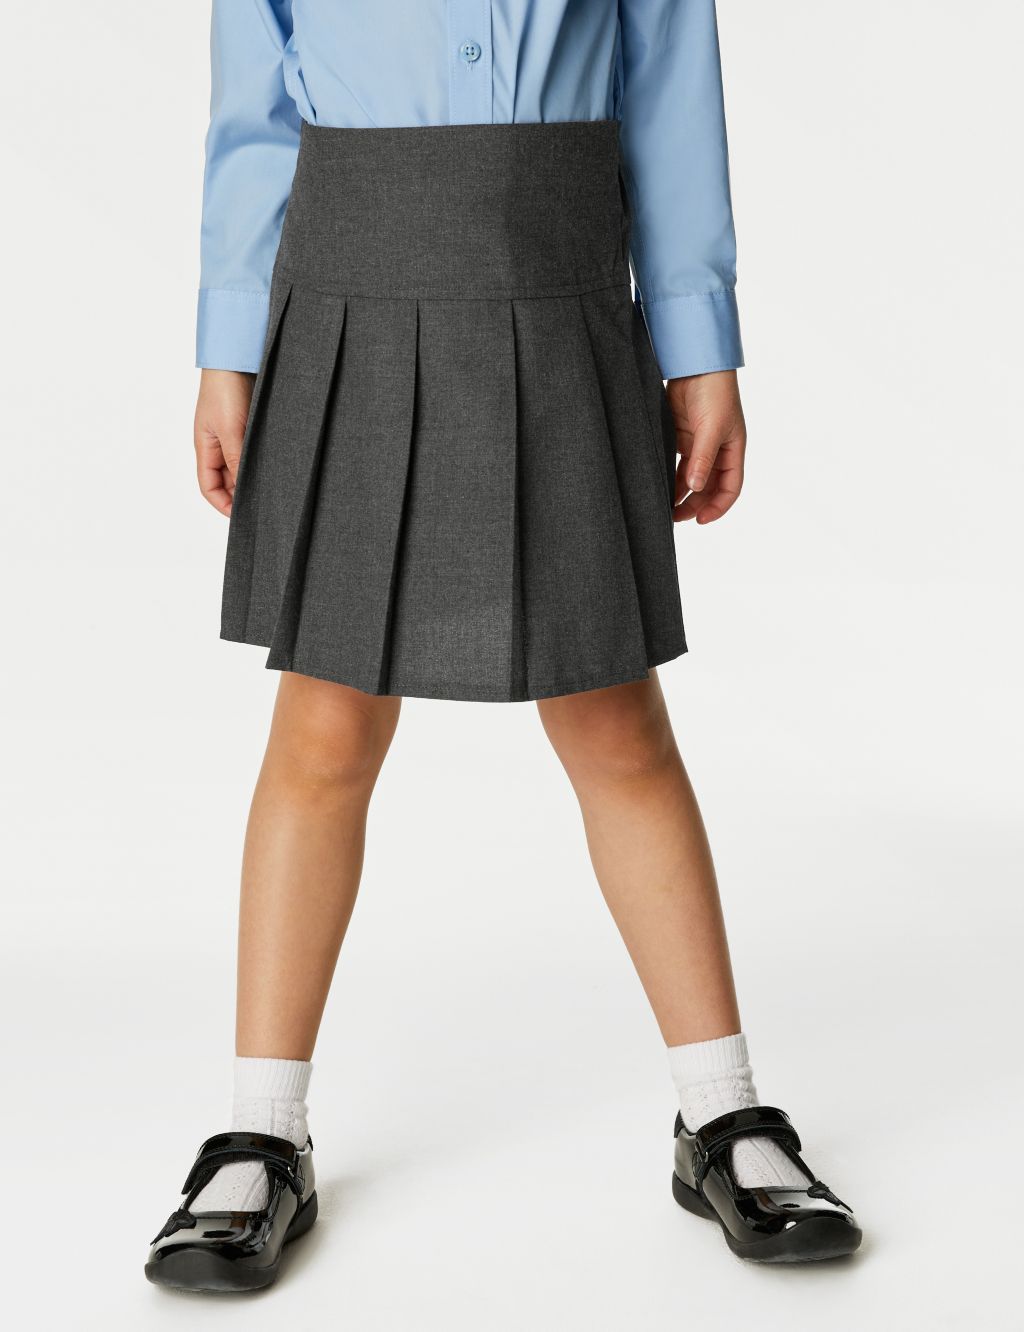 2pk Girls' Crease Resistant School Skirts (2-16 Yrs) image 3